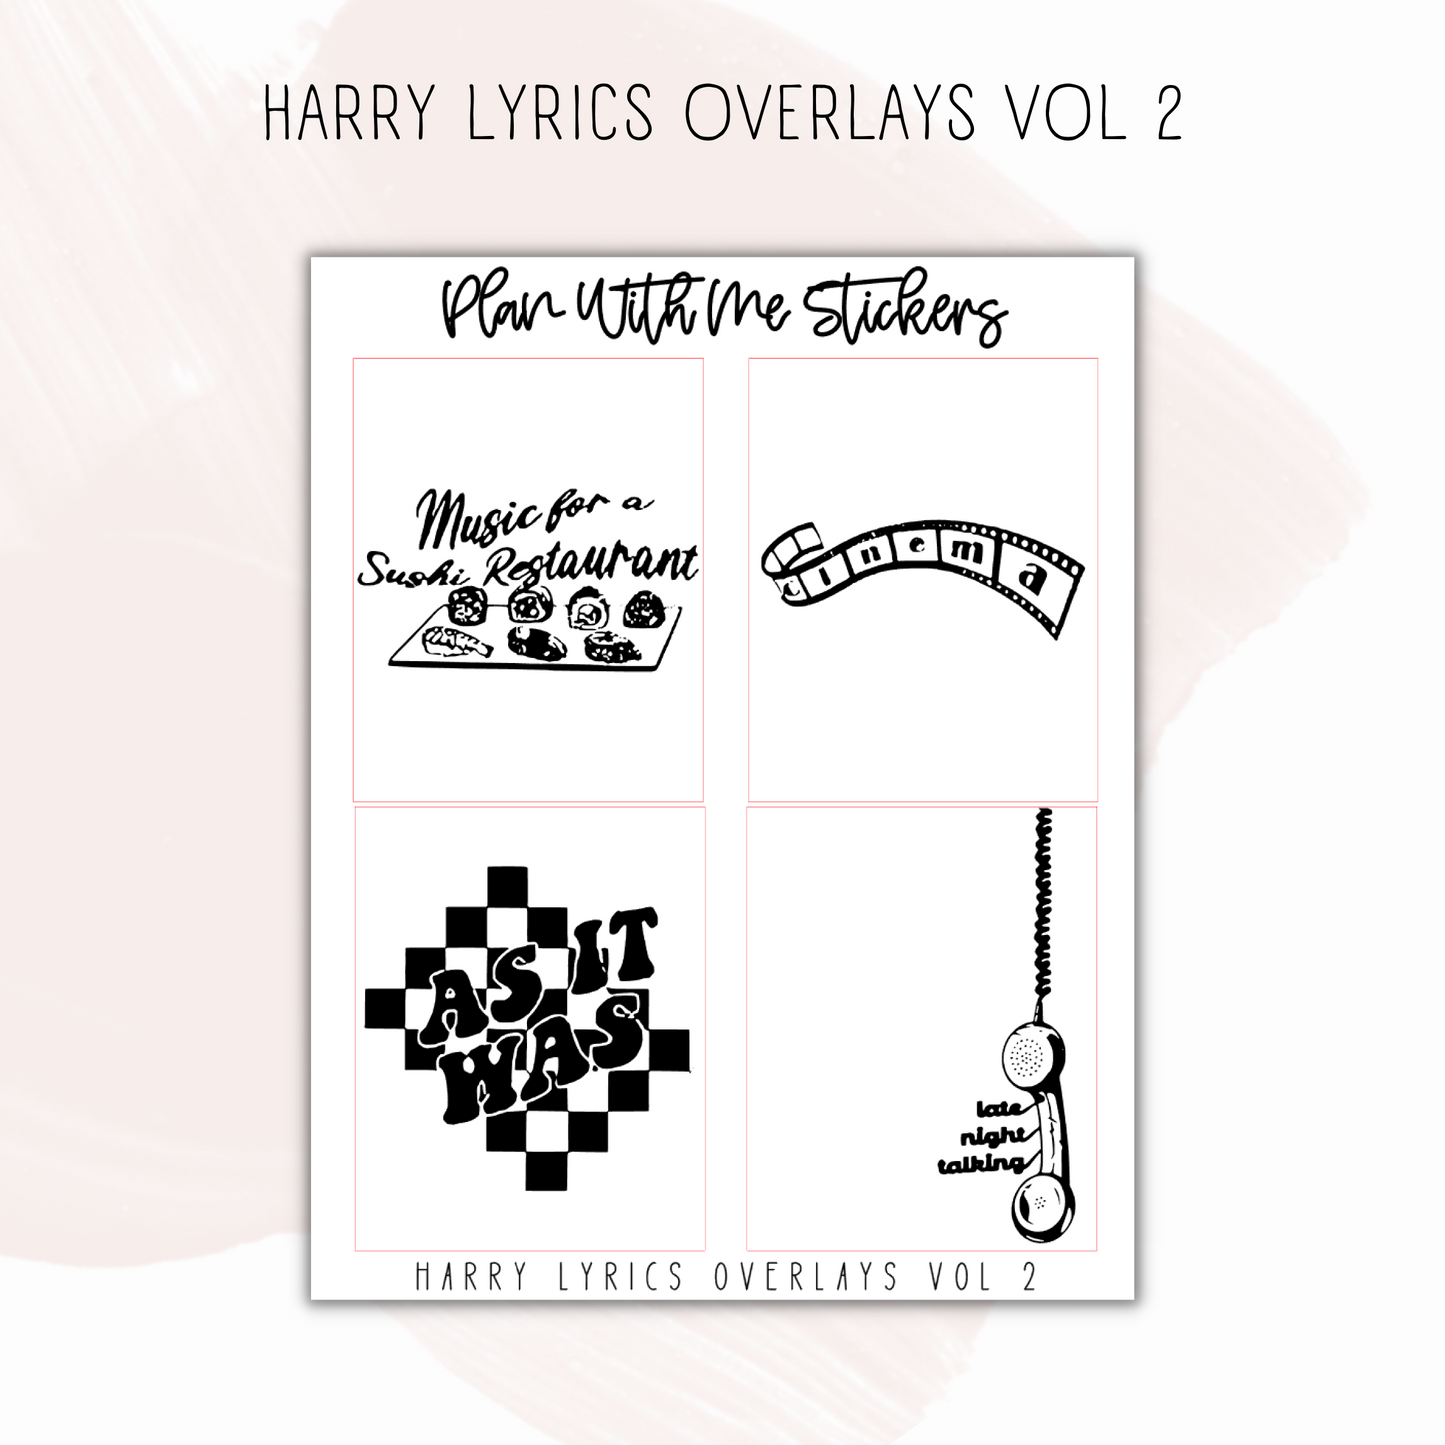 Harry Lyrics Overlays Vol 2